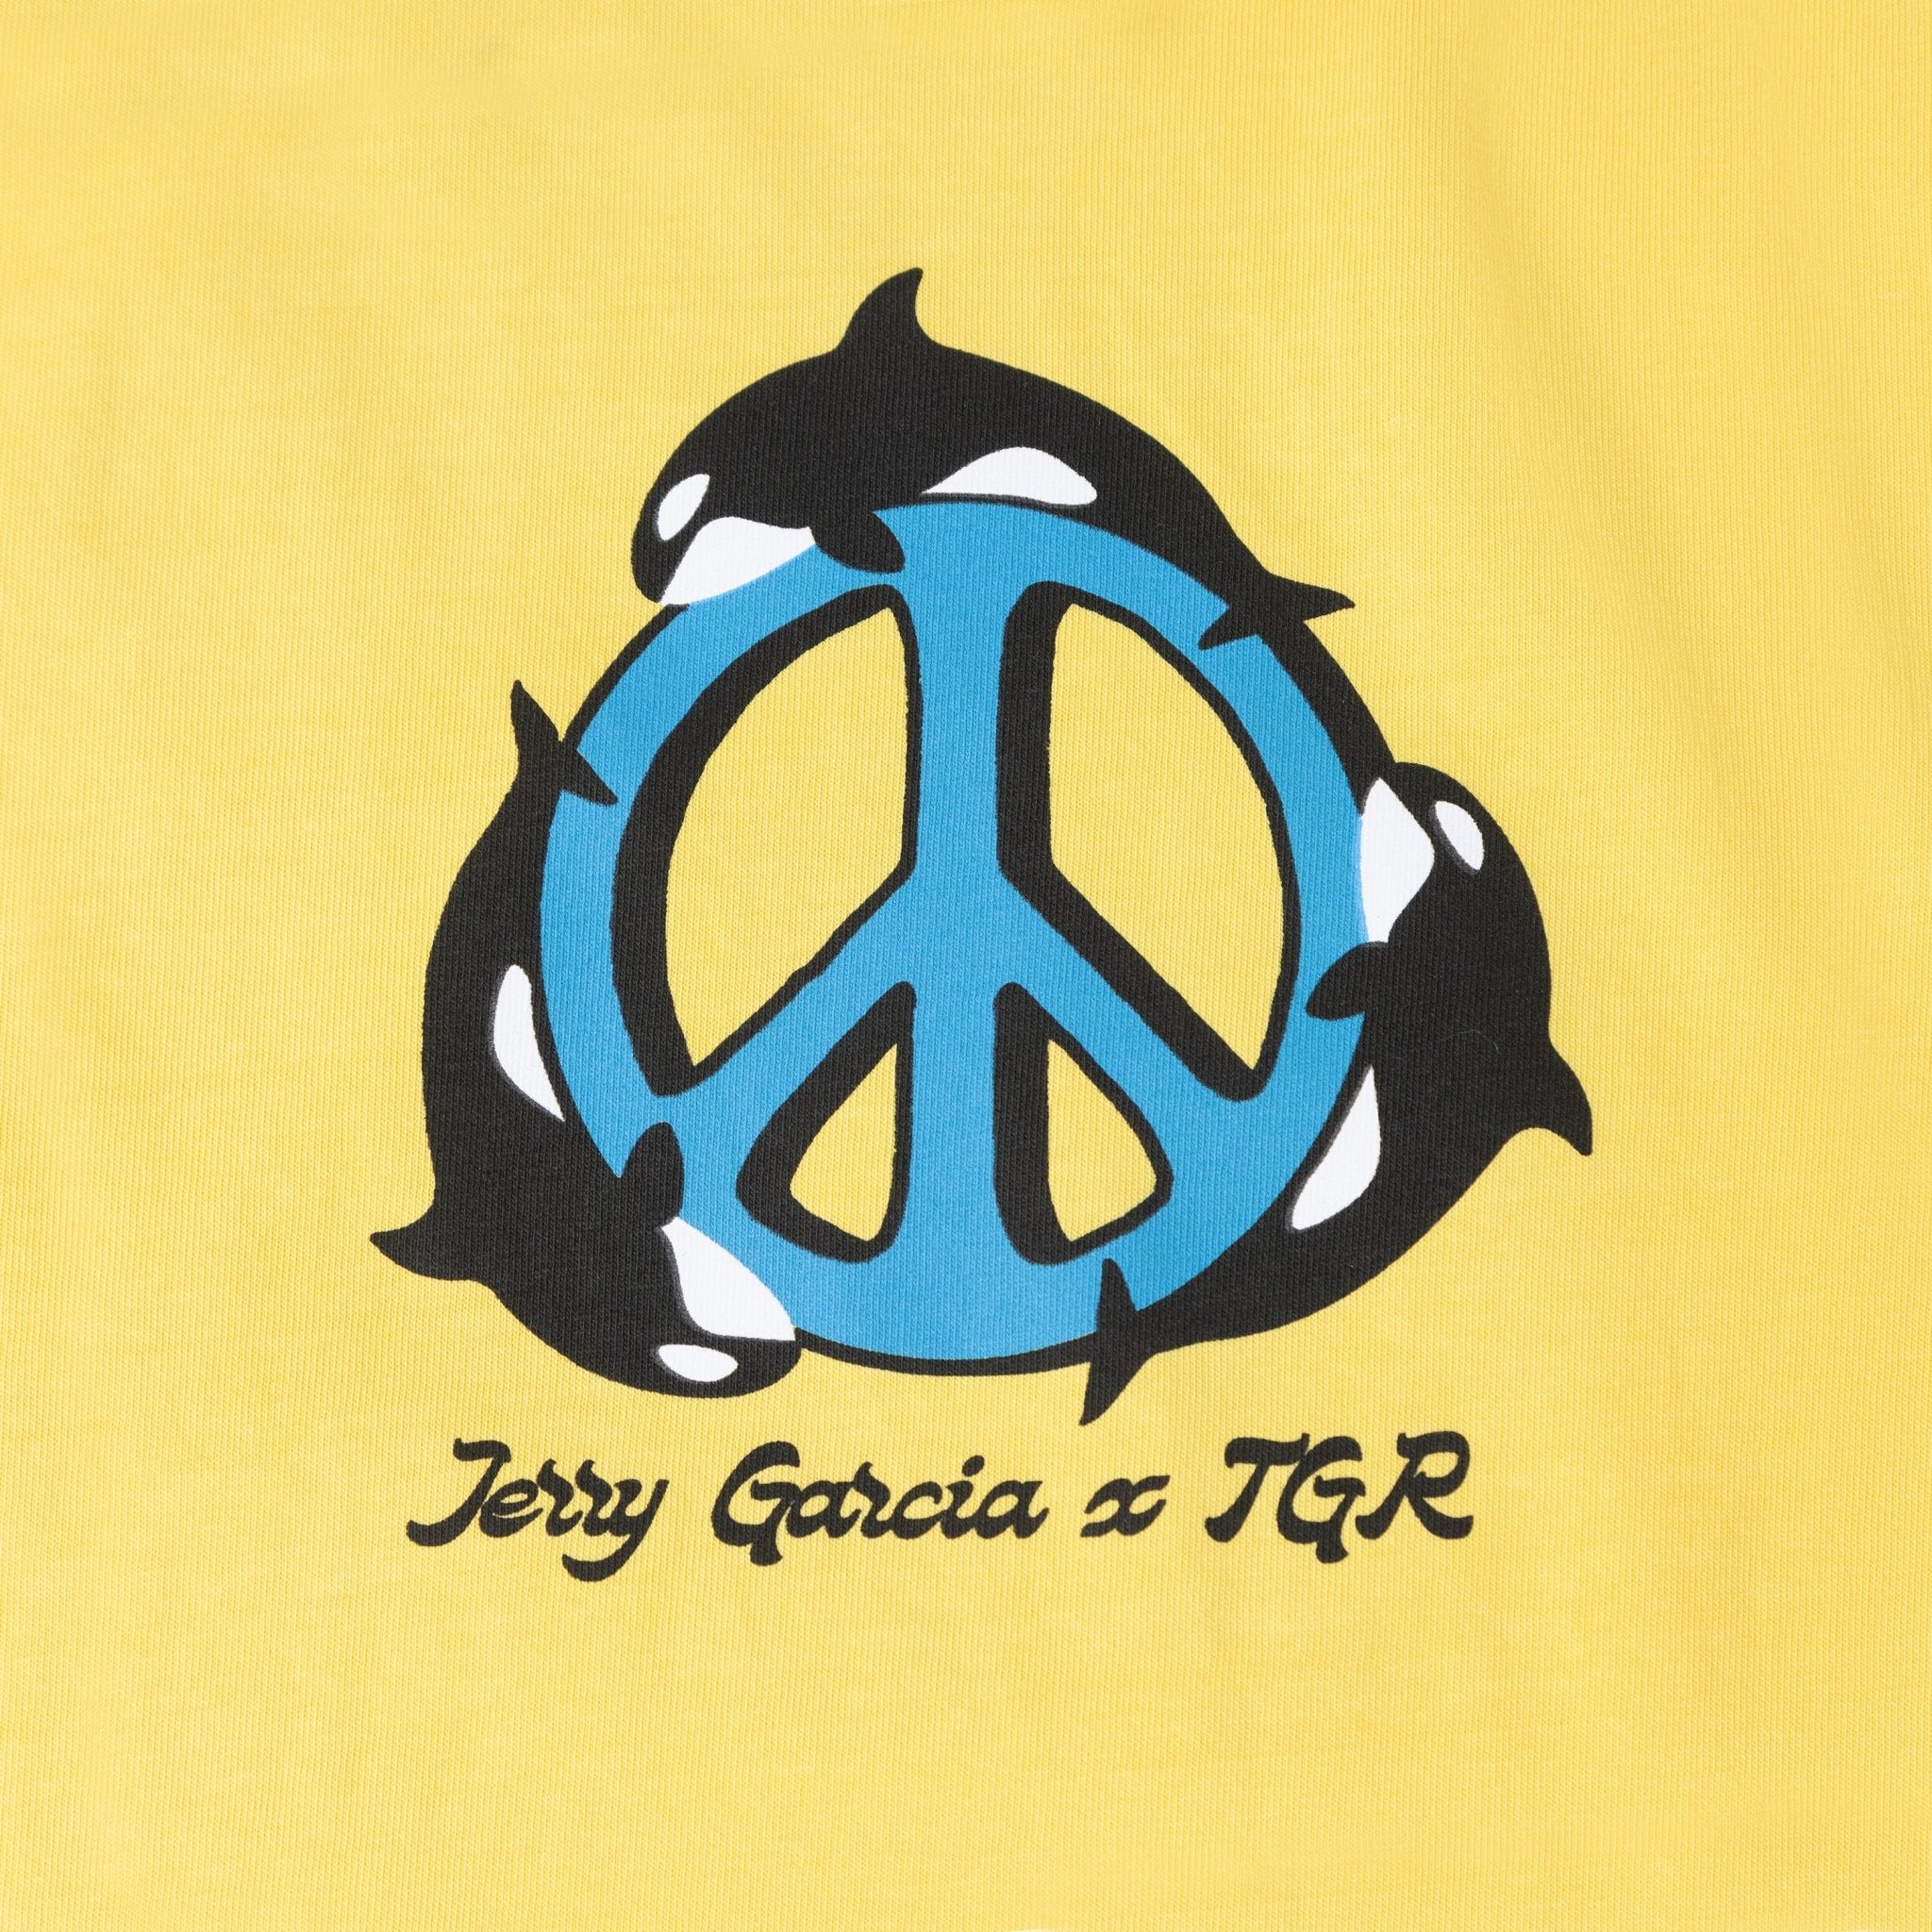 Jerry Garcia x TGR Orca Spiral Tee - Teton Gravity Research